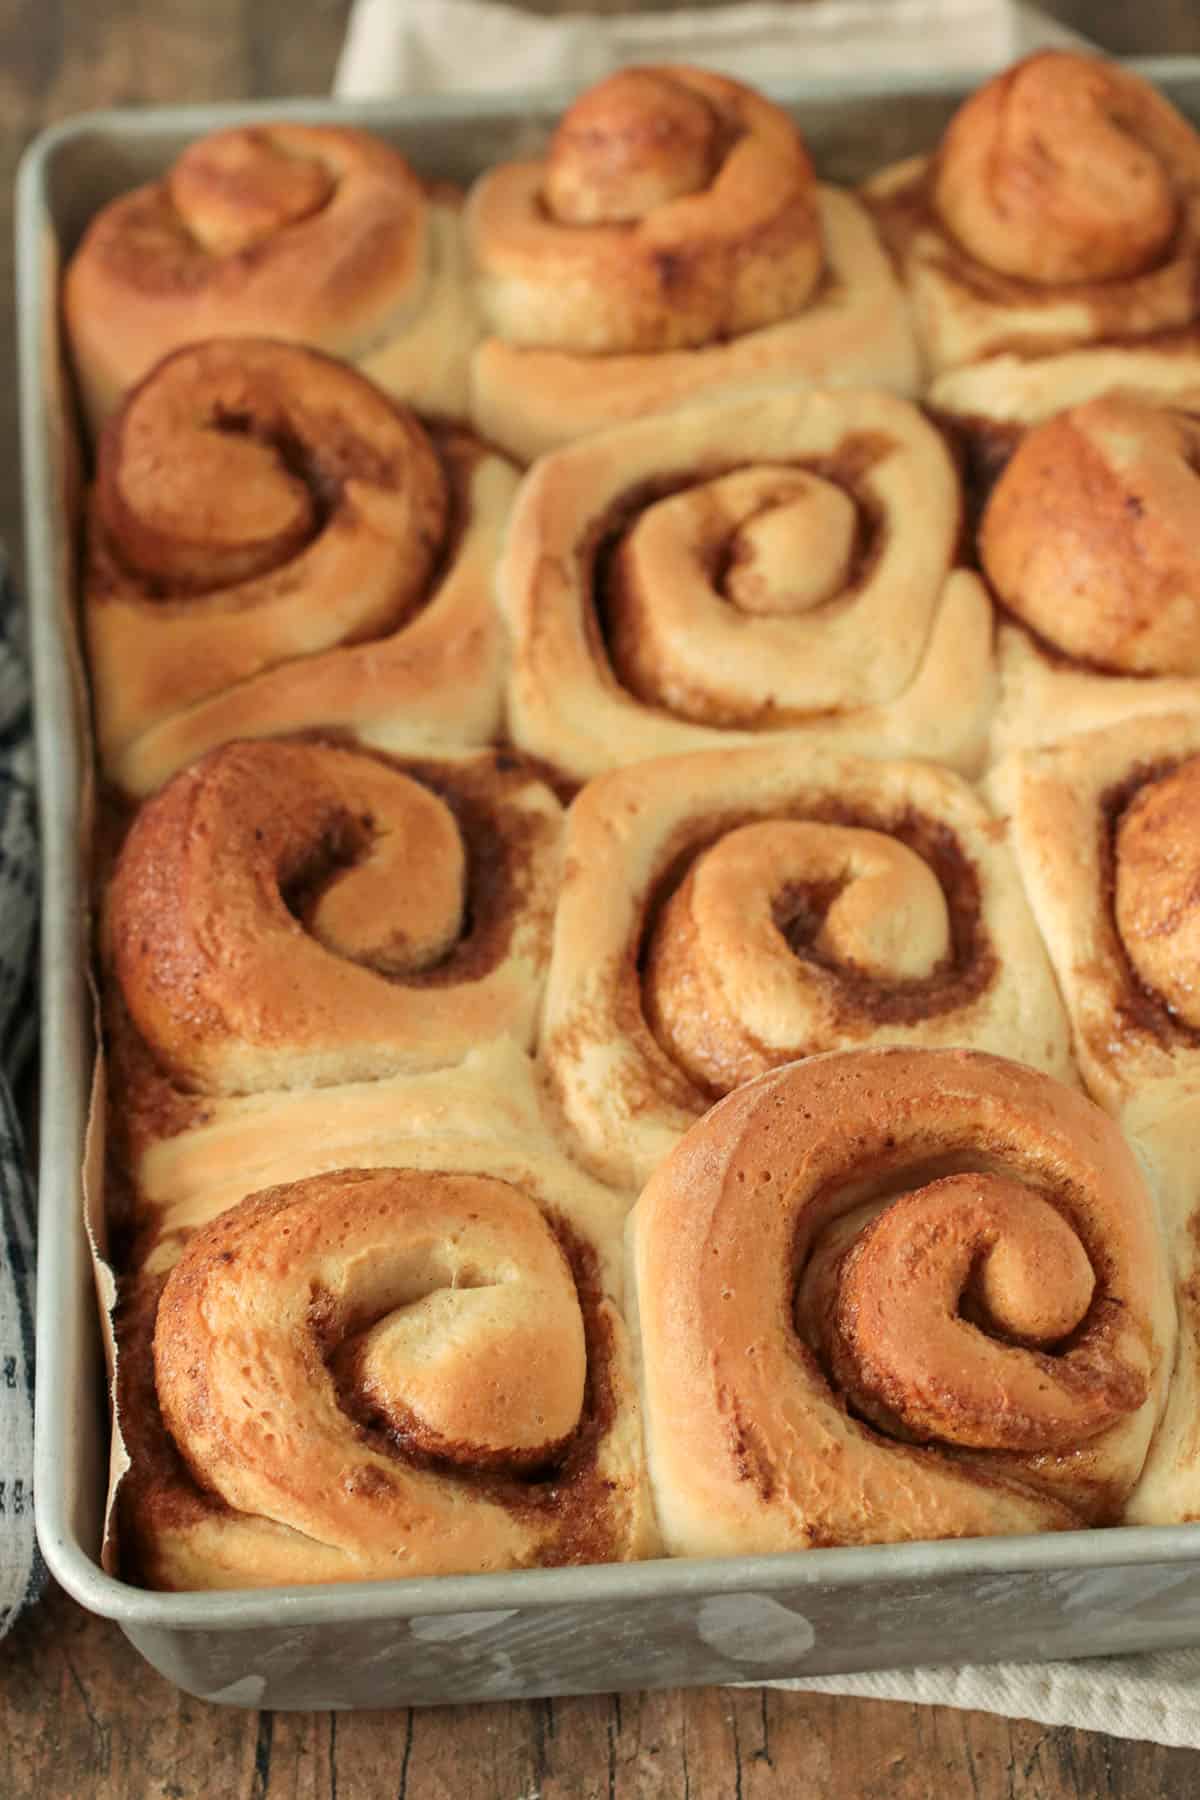 The freshly baked cinnamon buns.